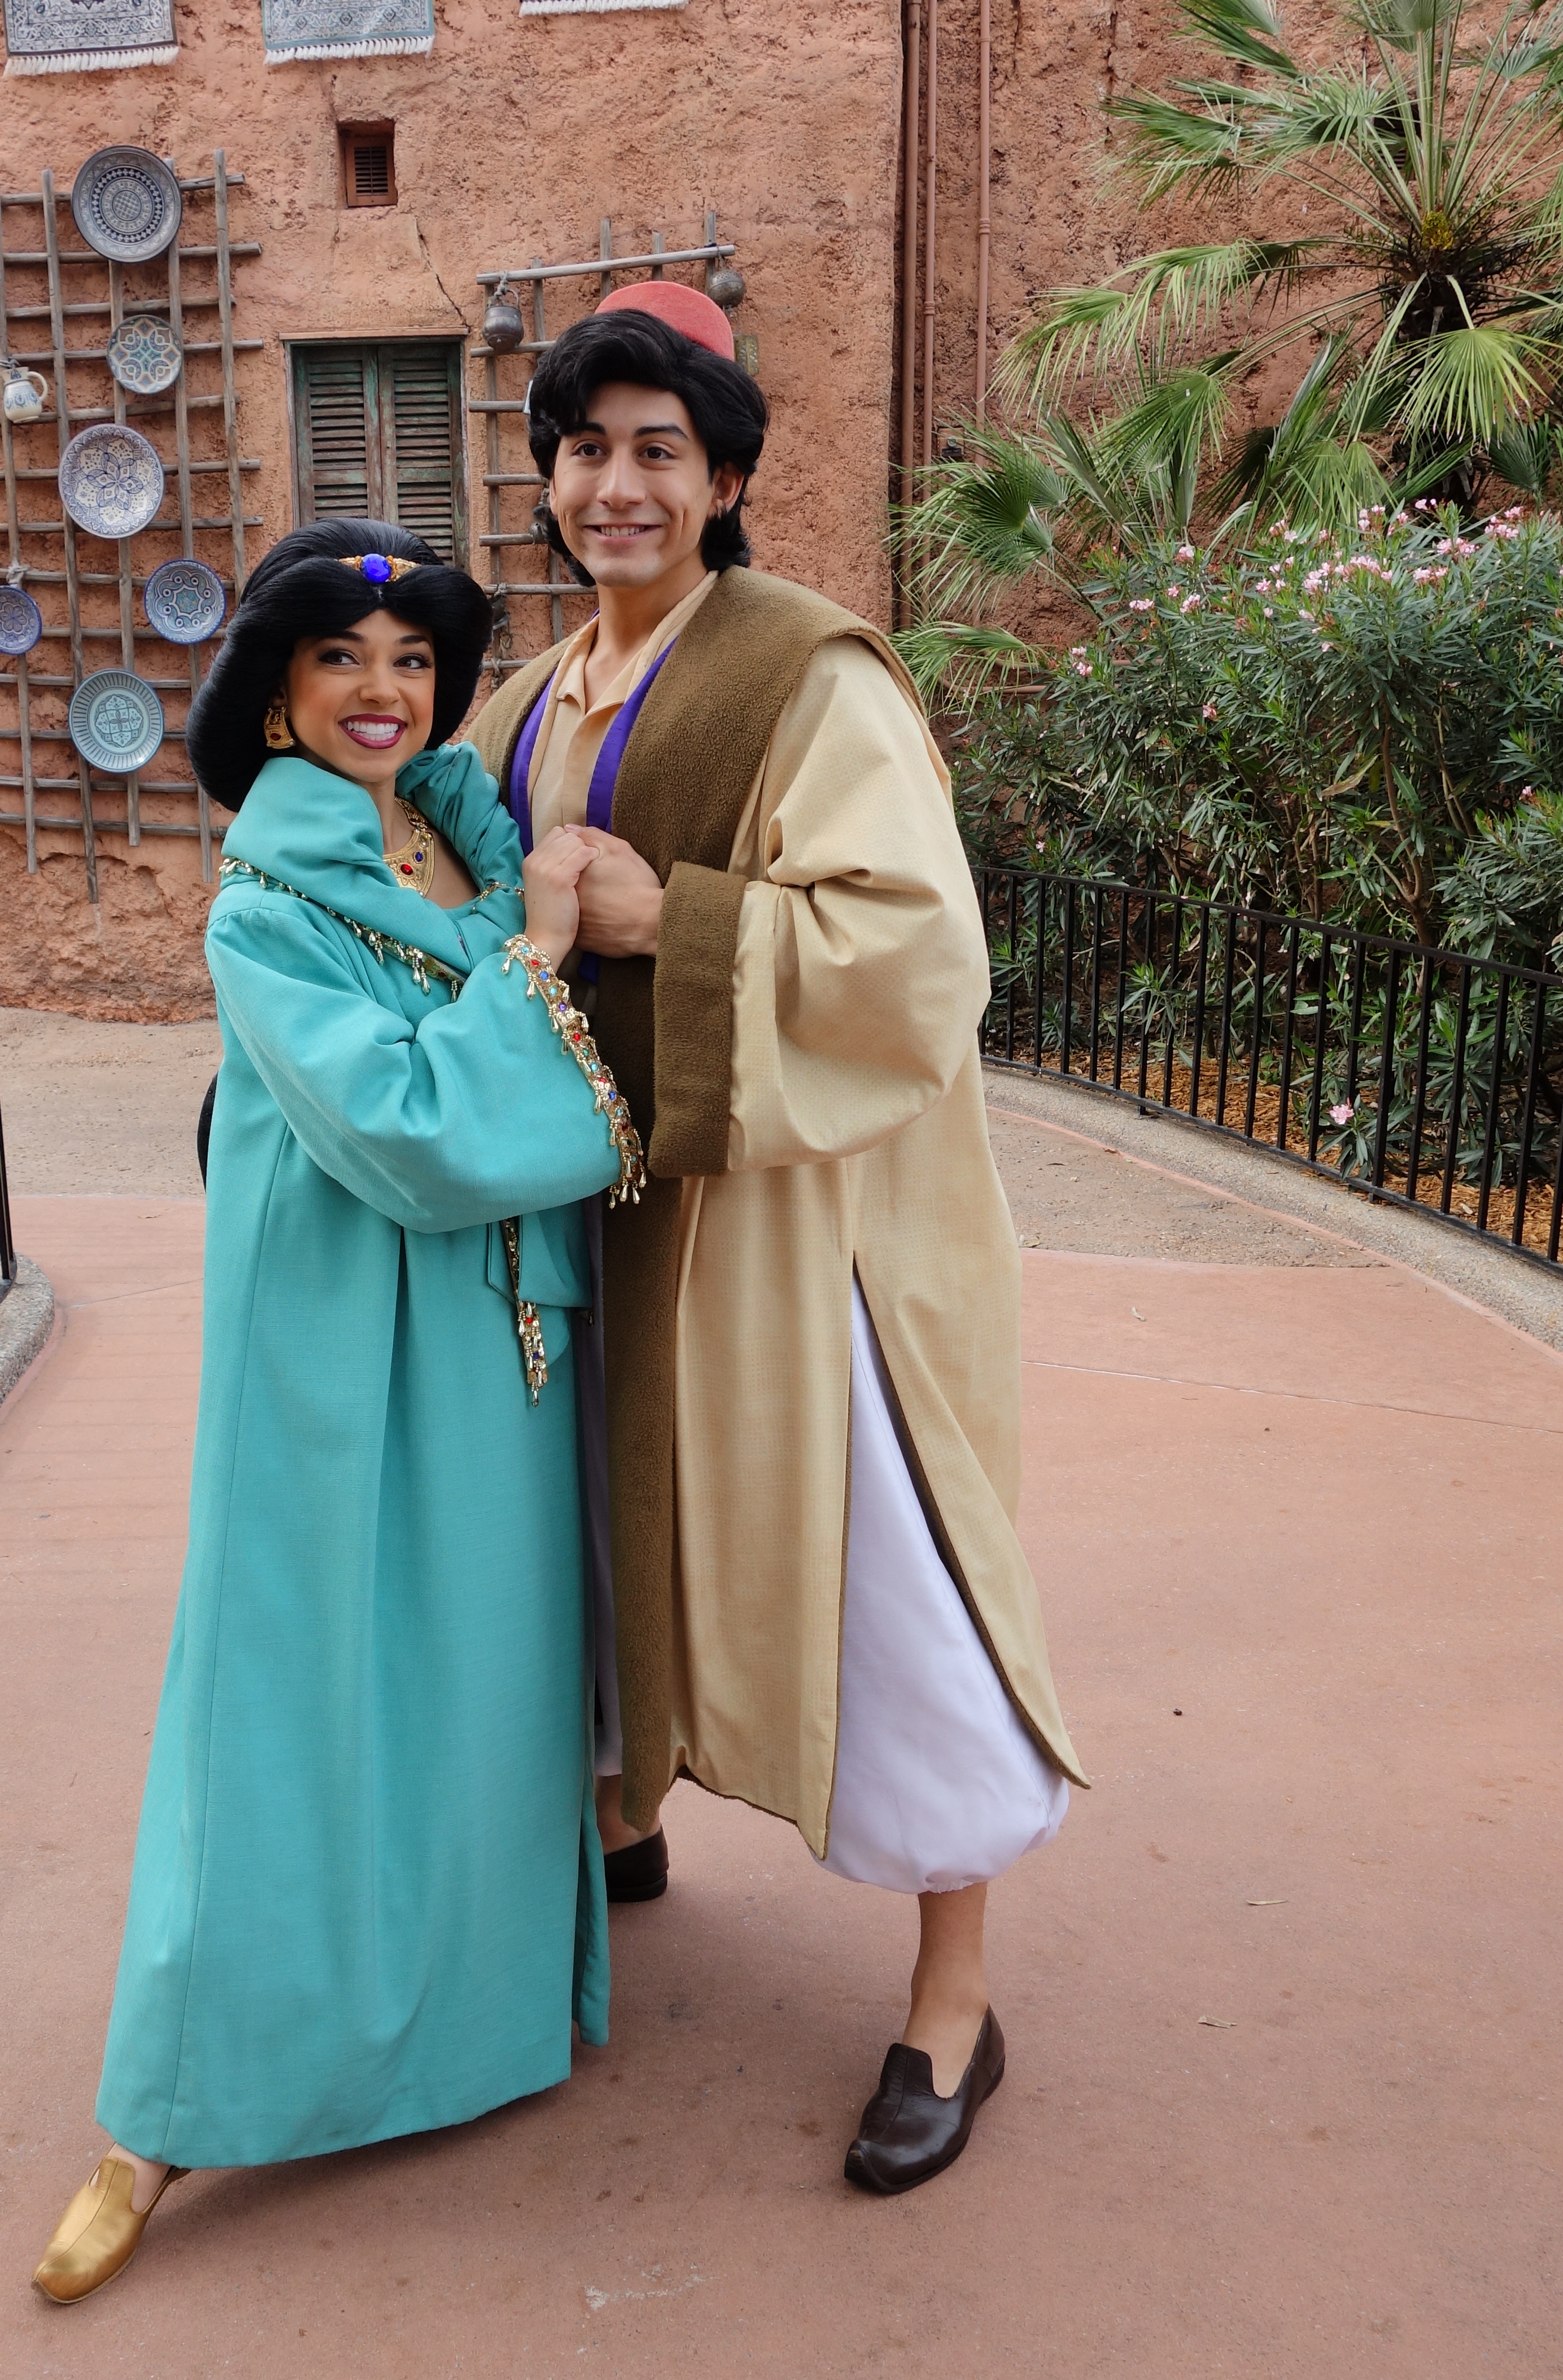 Aladdin and Jasmine at Morocco in EPCOT 2013